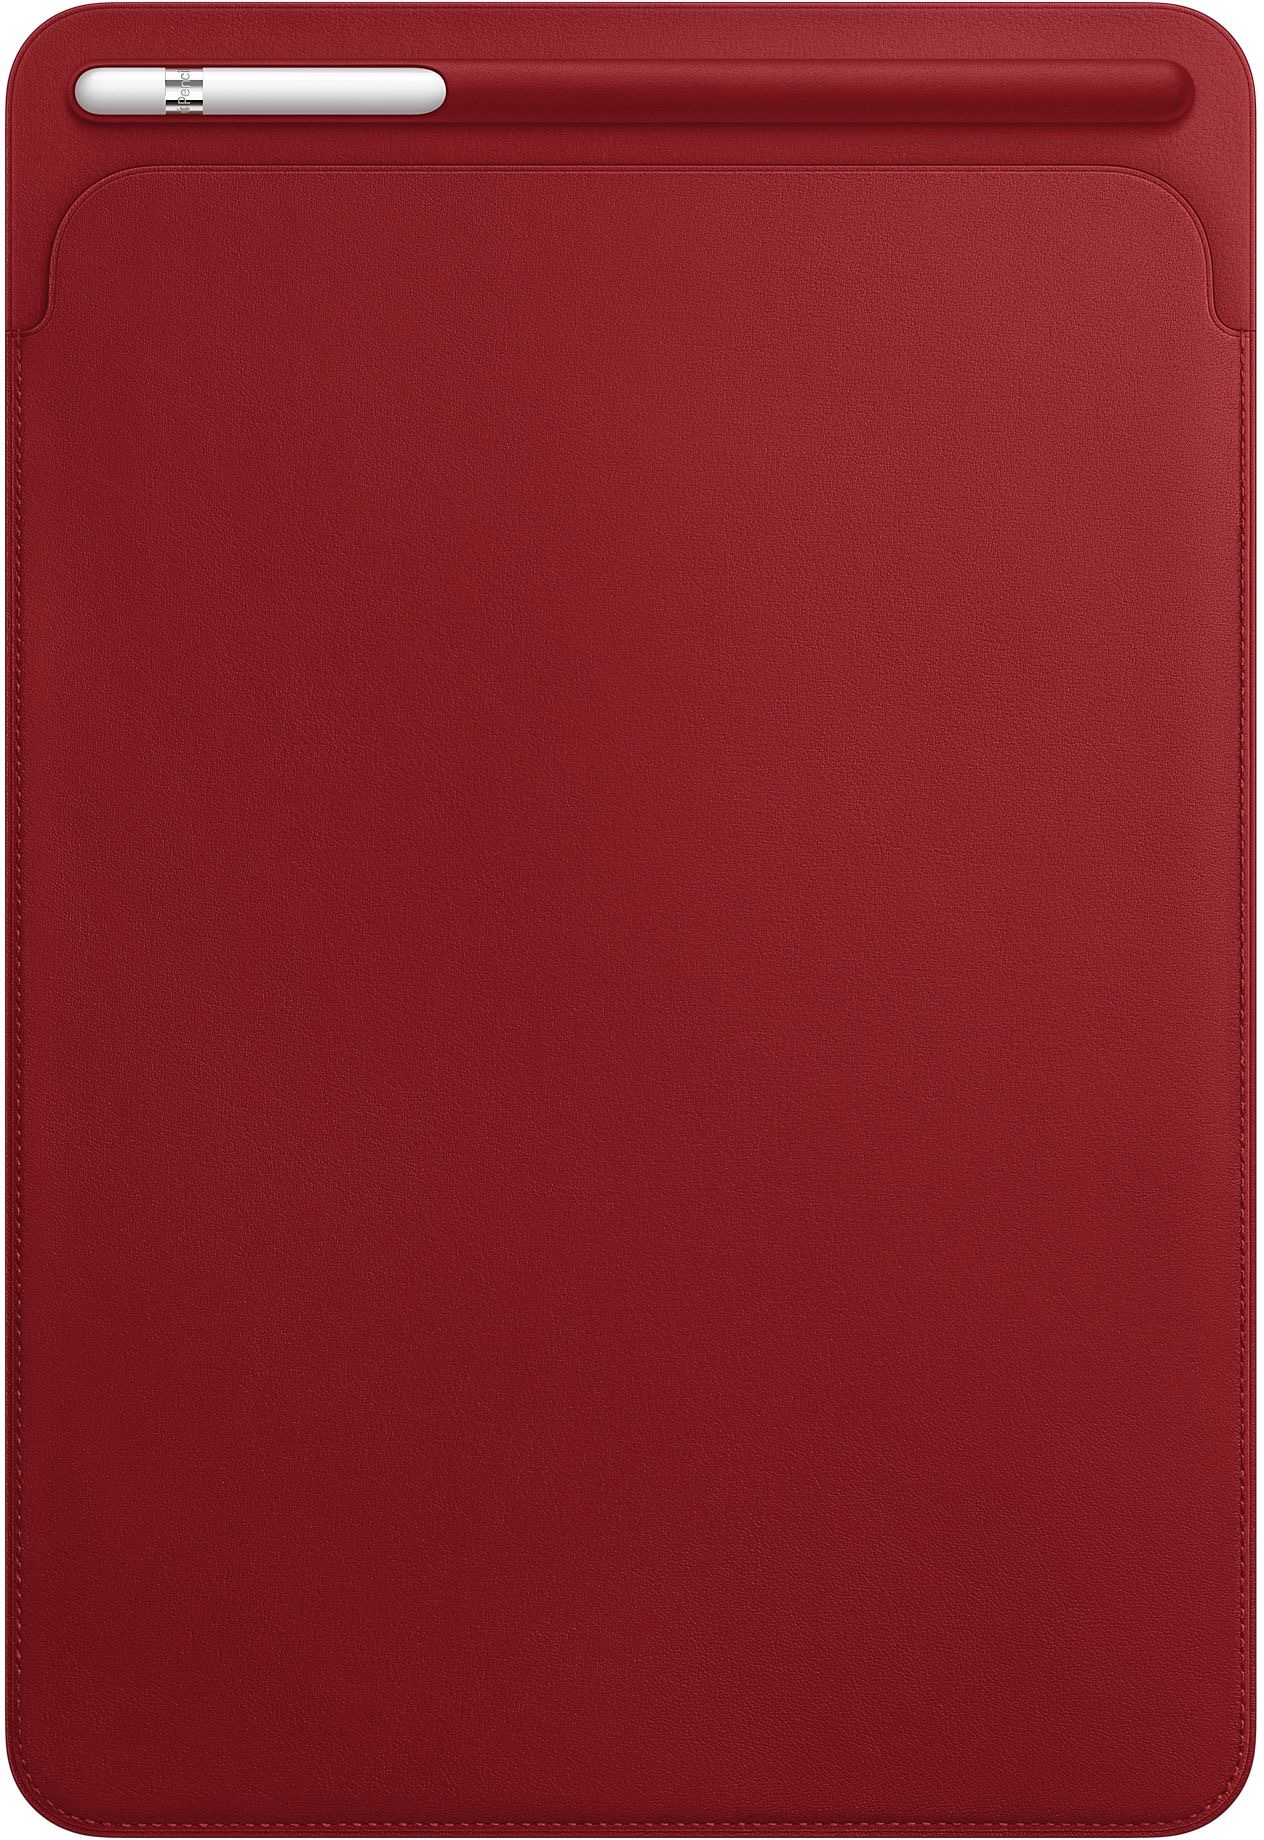 Capa de couro para iPad Pro de 10,5 pol. - (PRODUCT)RED